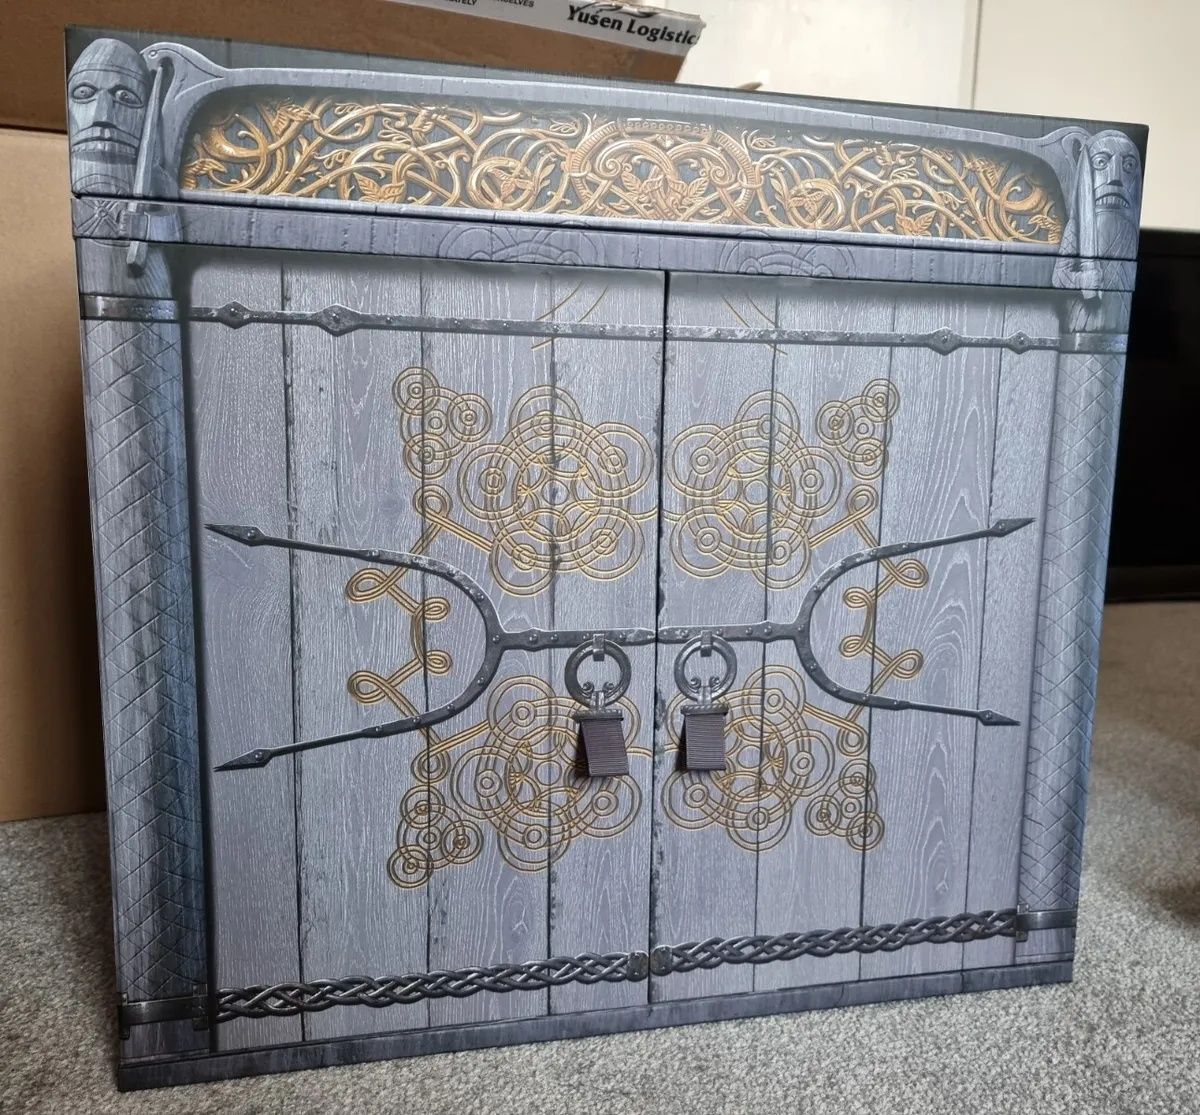 God of War Ragnarok Collector's BOX ONLY PS5 (doar cutiile)